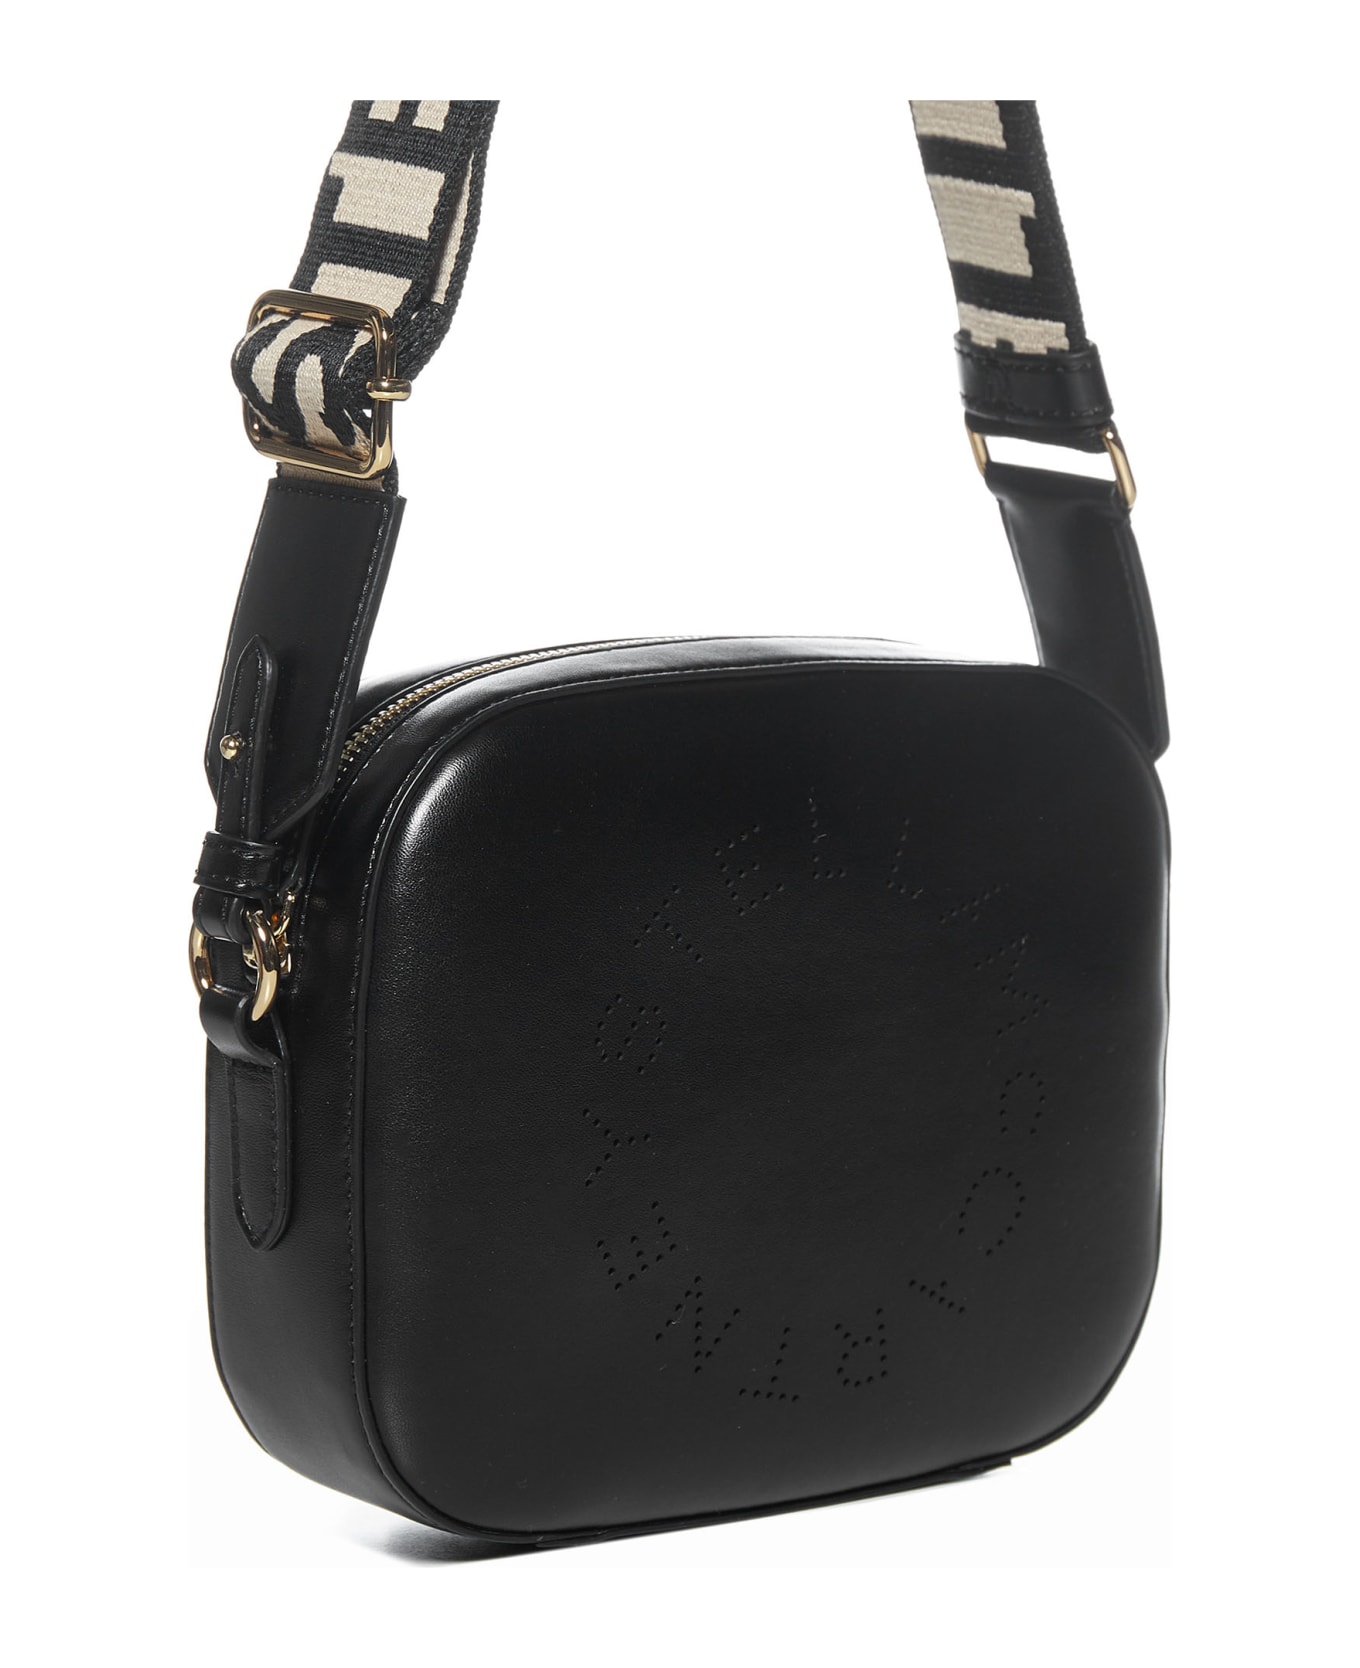 Stella McCartney Camera Bag With Perforated Stella Logo - Black ショルダーバッグ